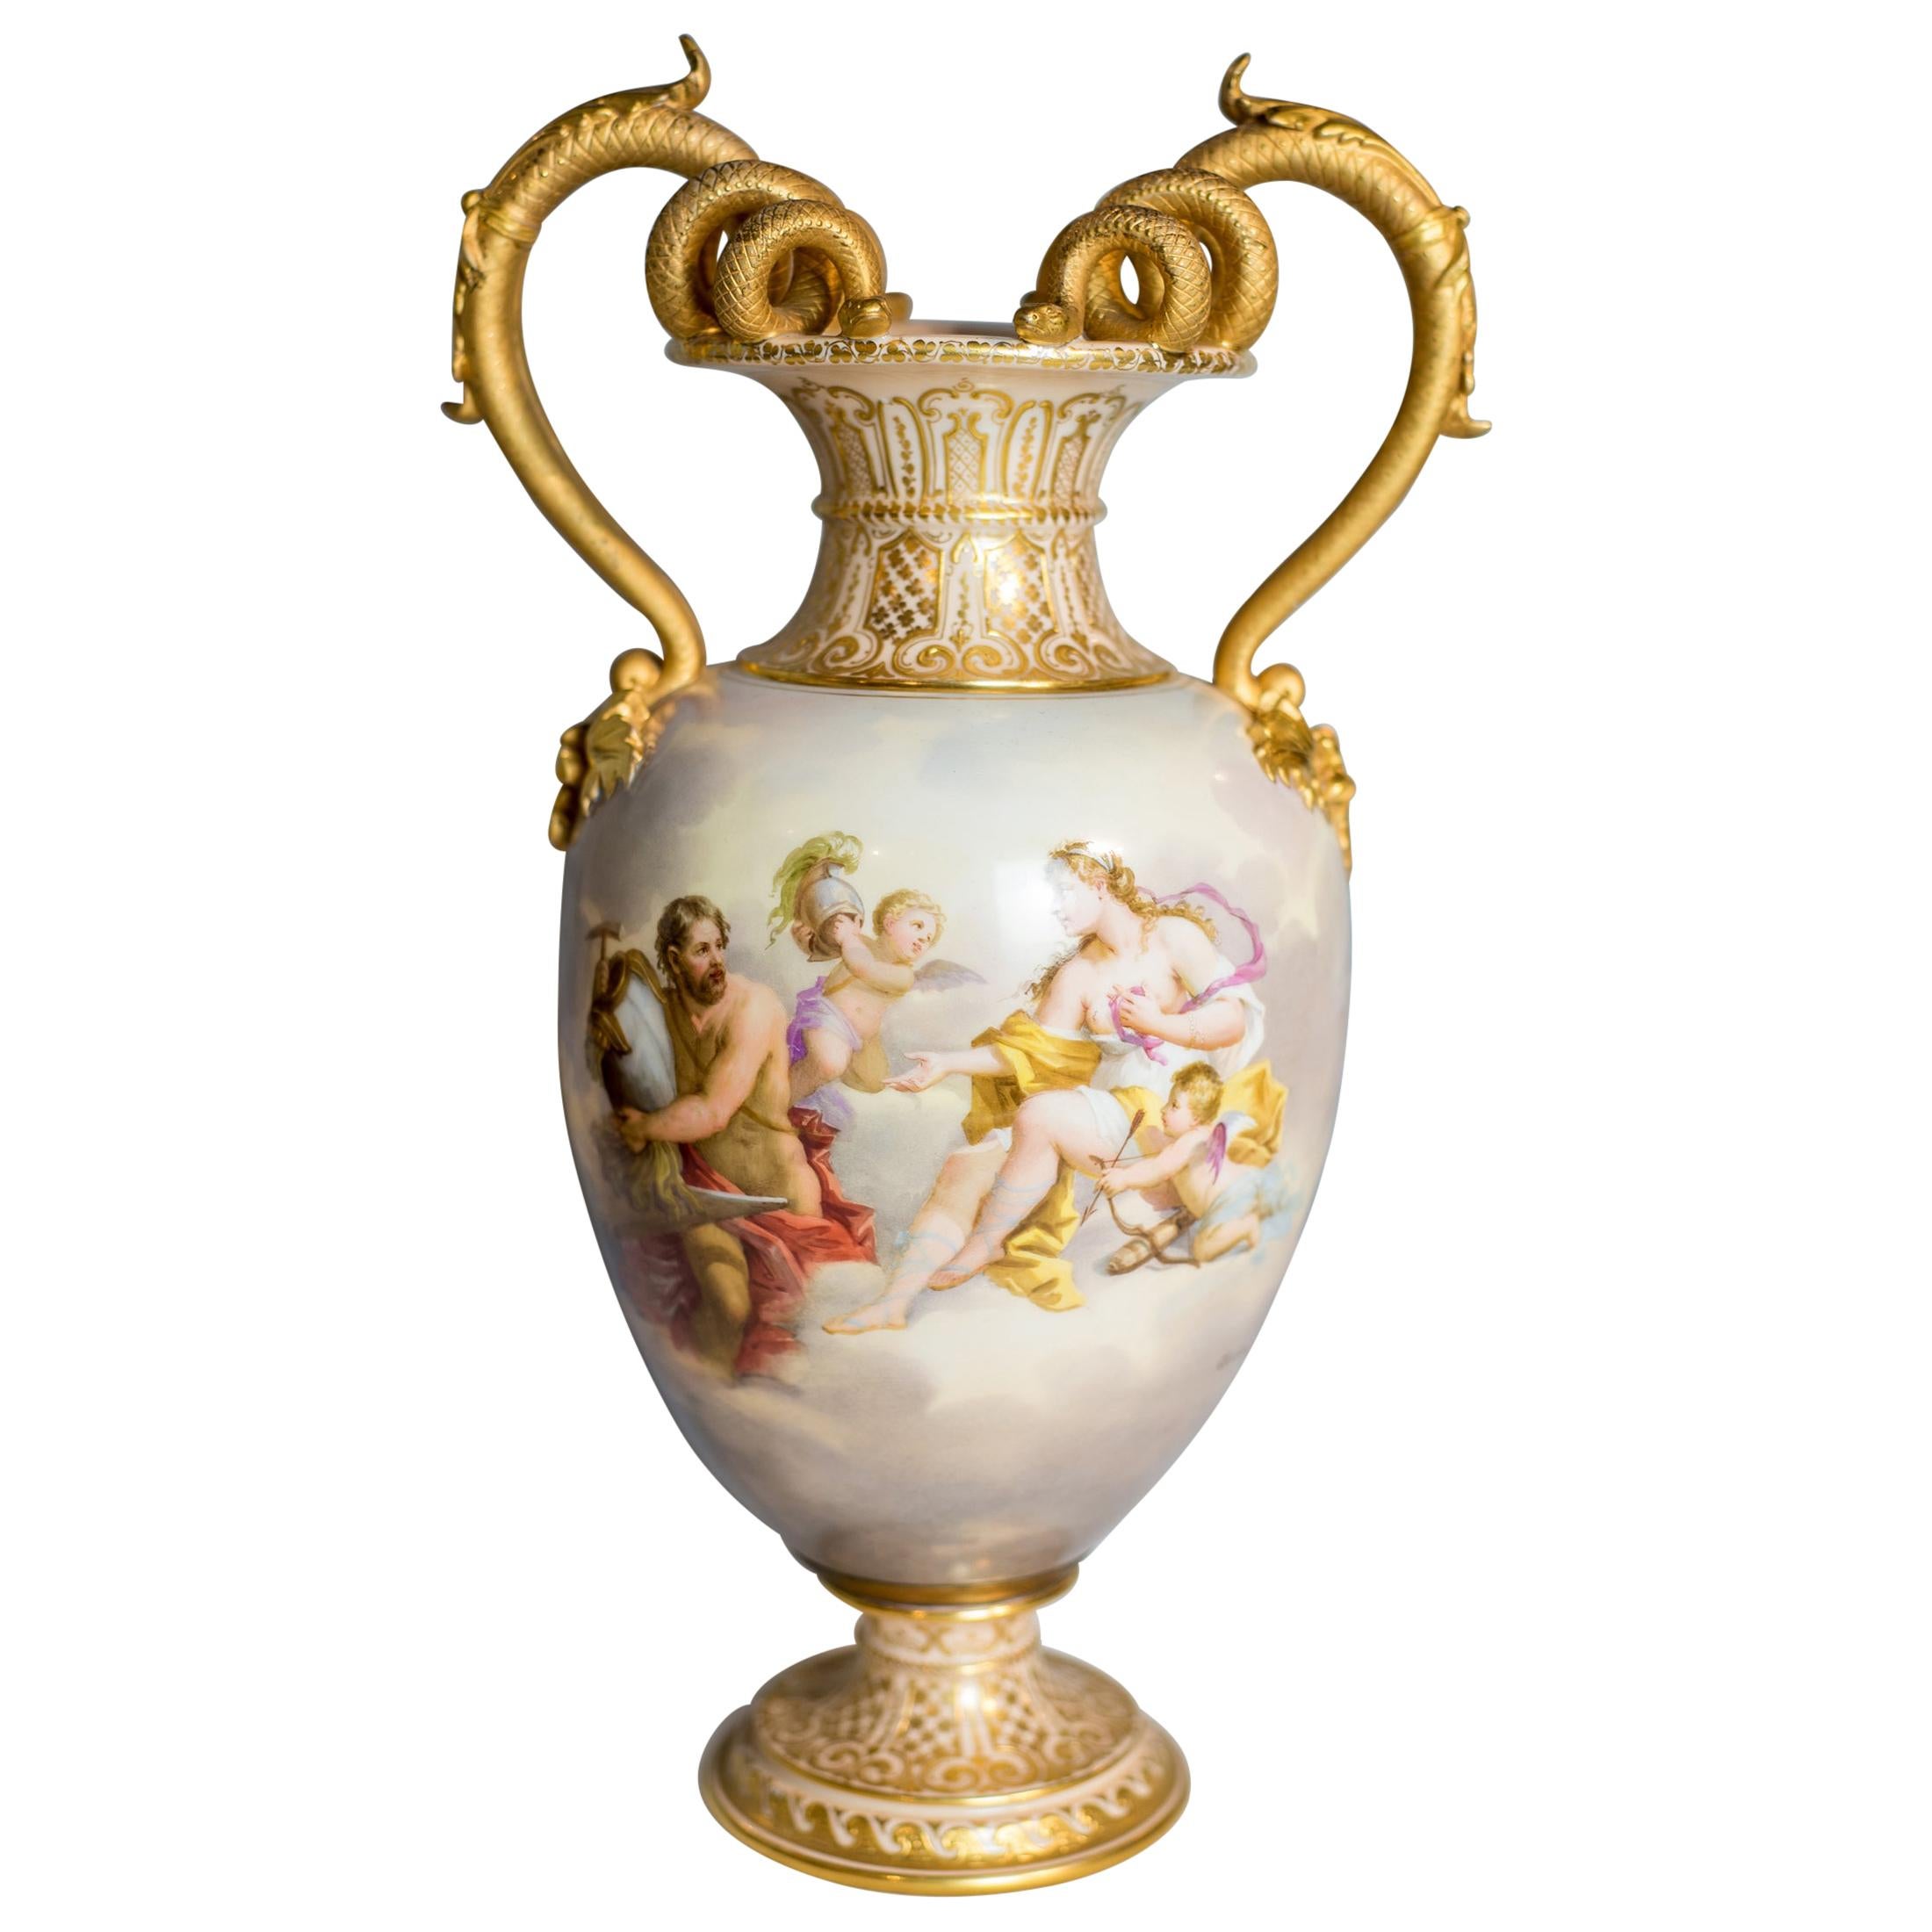 Late 19th Century Royal Vienna Porcelain Vase